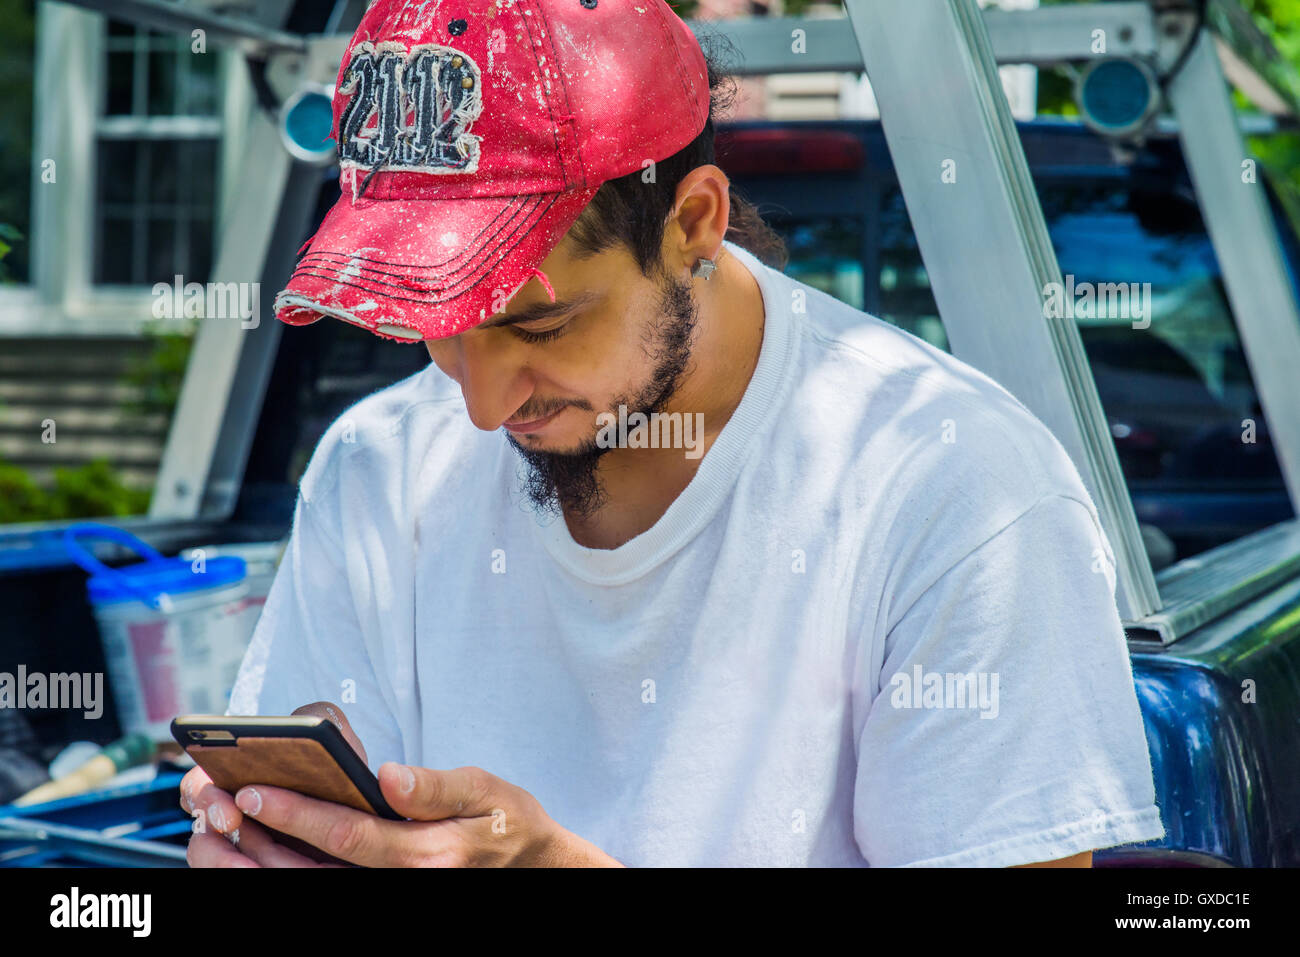 Man wearing baseball cap using smartphone Stock Photo